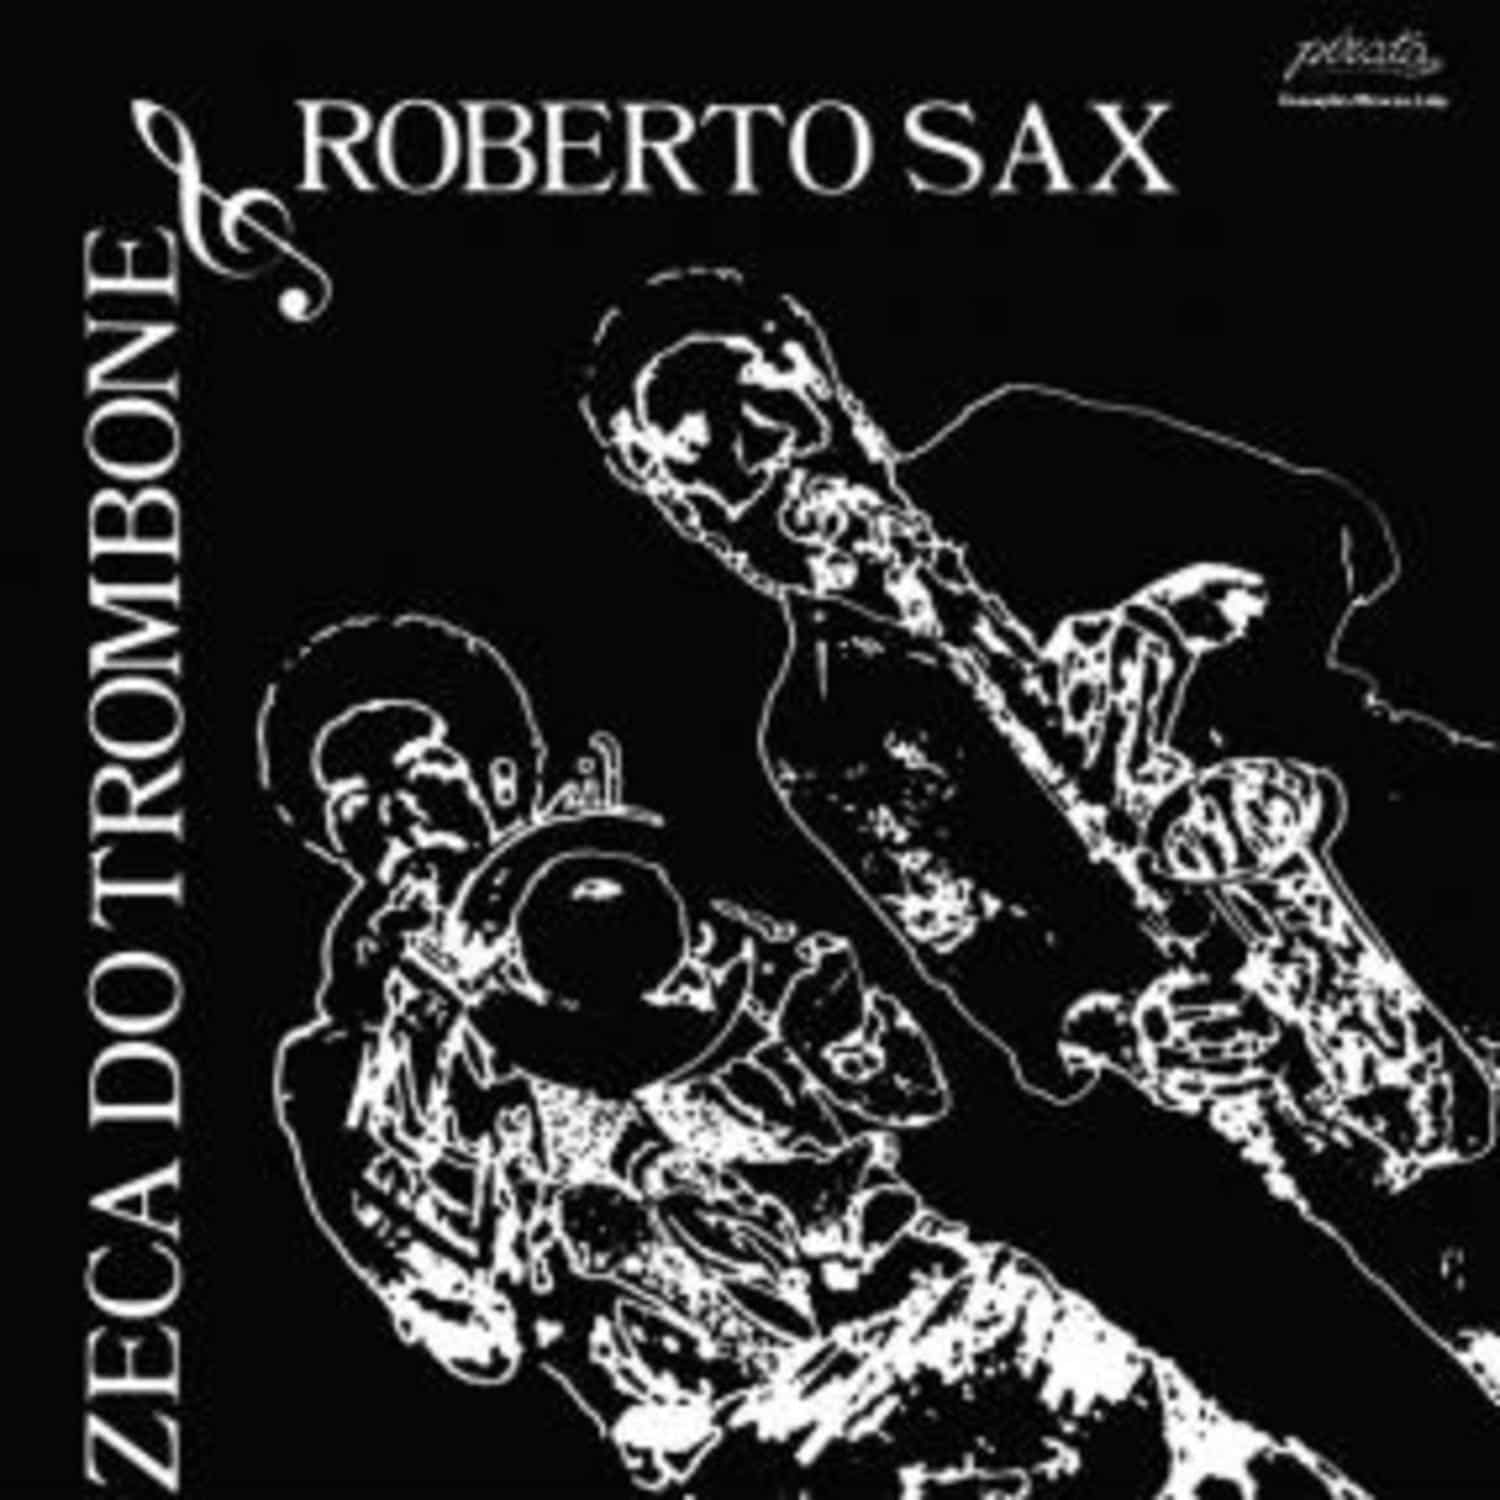 Zeca Do Trombone & Roberto Sax - S/T 